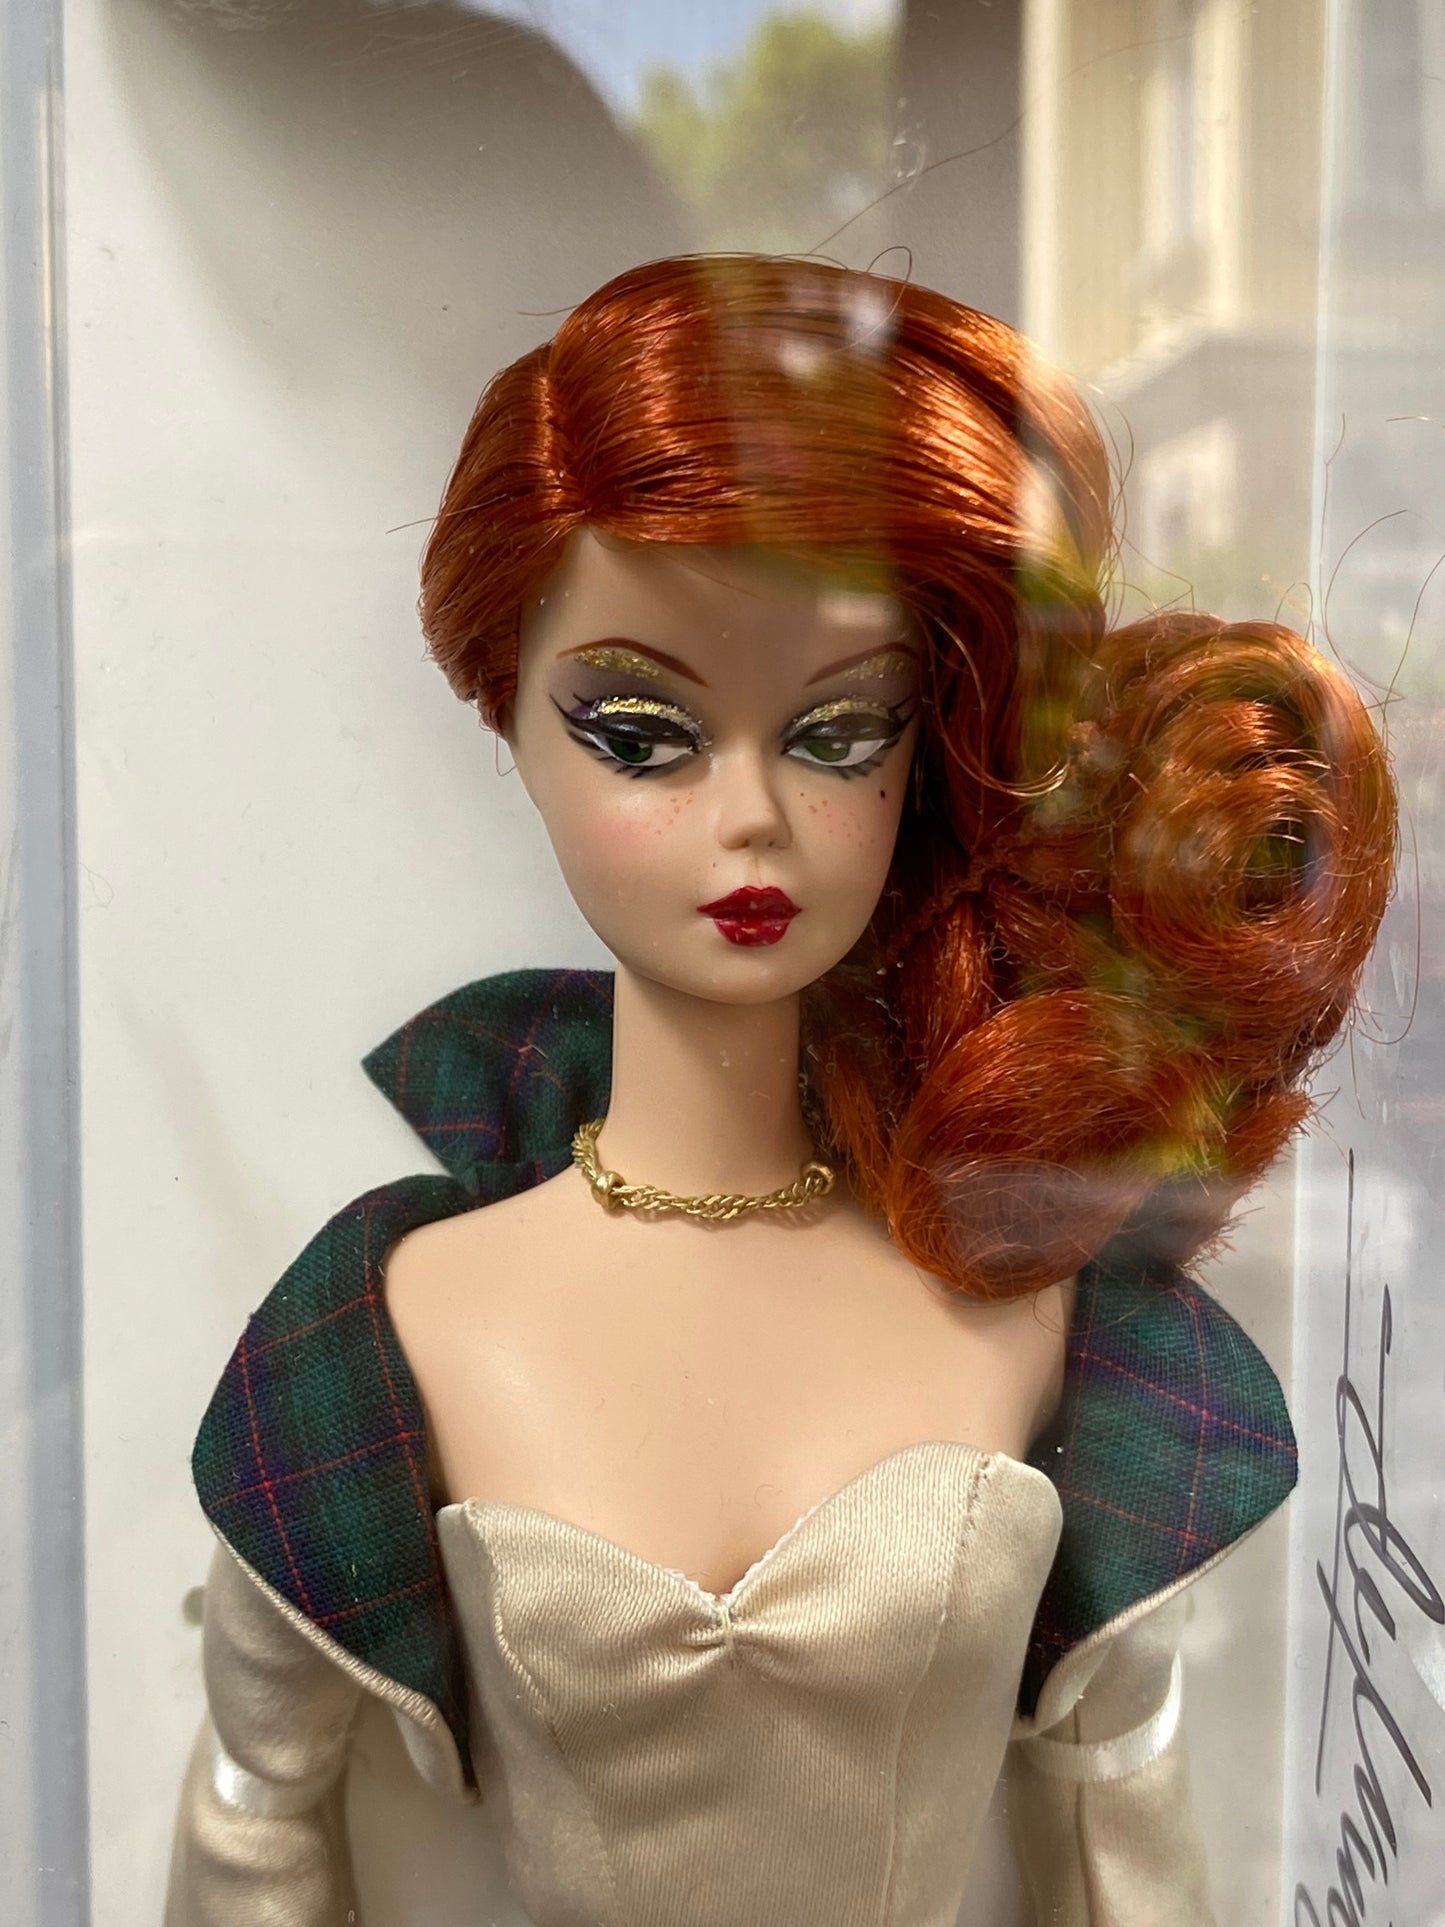 Grant A Wish Convention Fashion Model Silkstone Barbie Doll GAW Scottish Highlands Mattel 2017